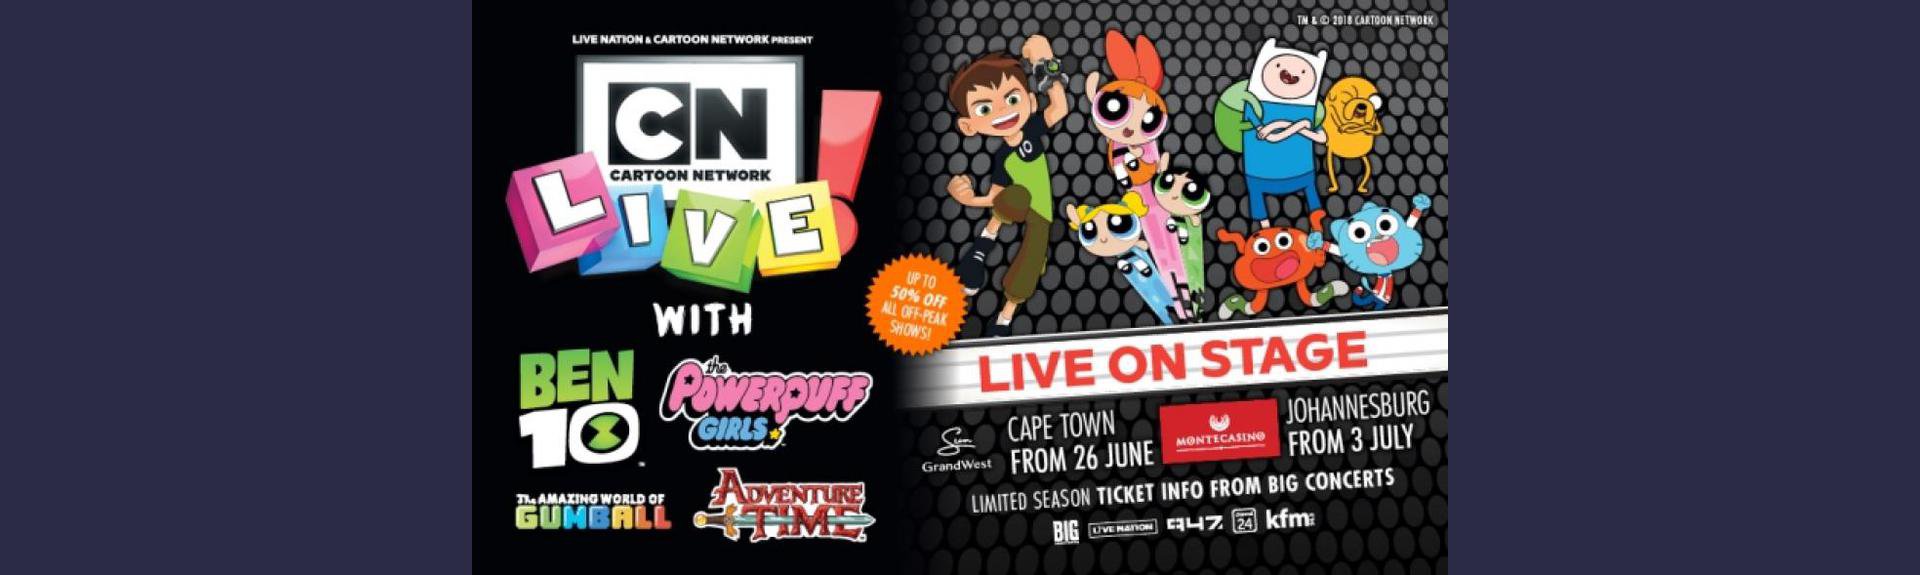 Cartoon Network Live Johannesburg 2018